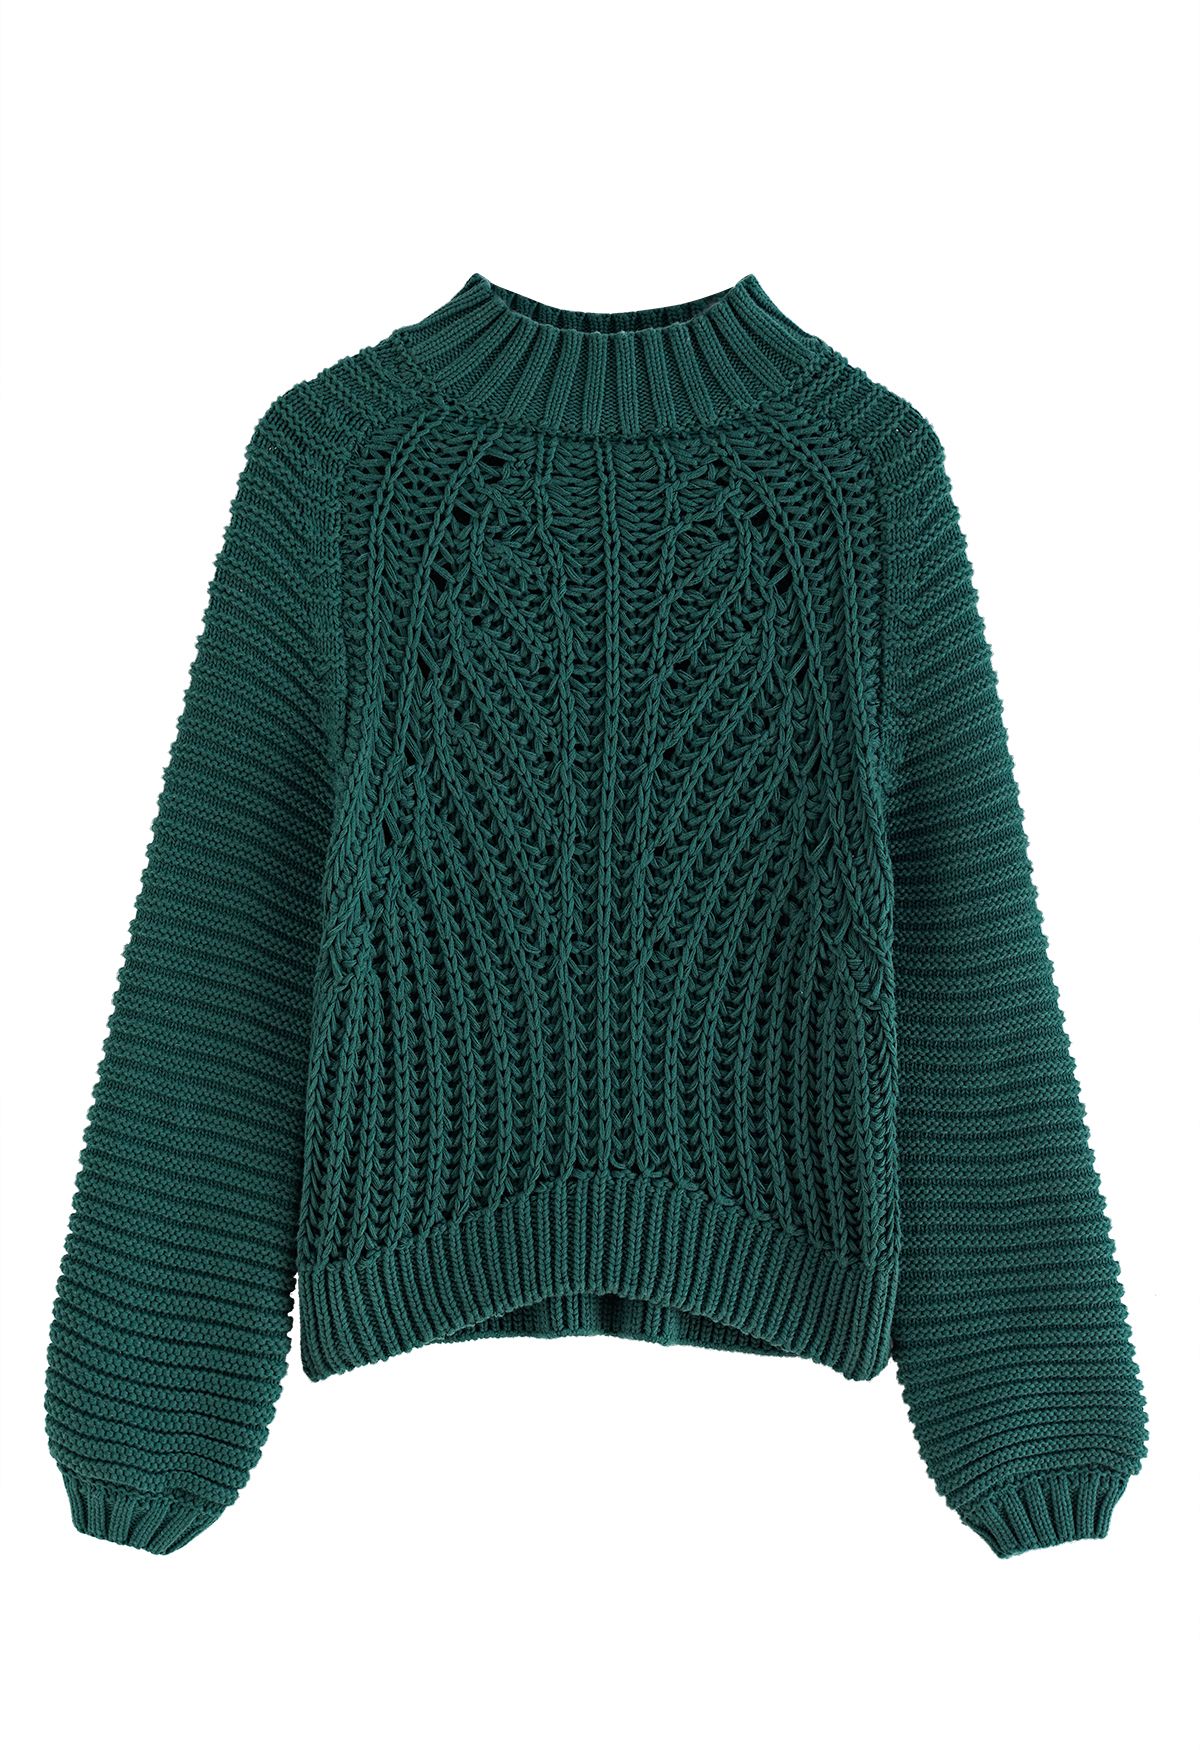 16 Chunky Cropped Sweater Knitting Patterns